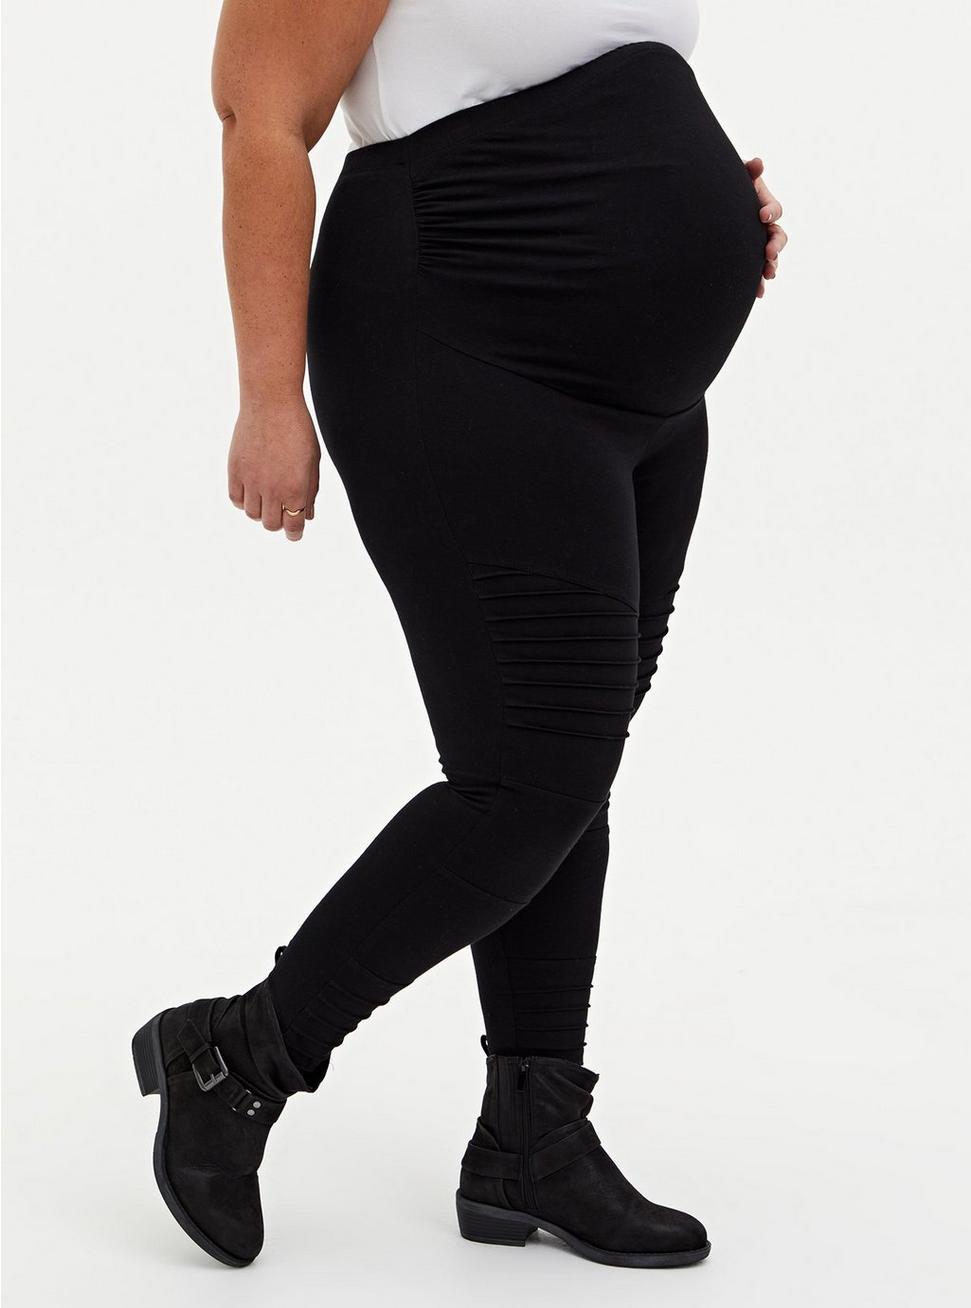 Plus Size - Maternity Legging - Moto Black - Torrid